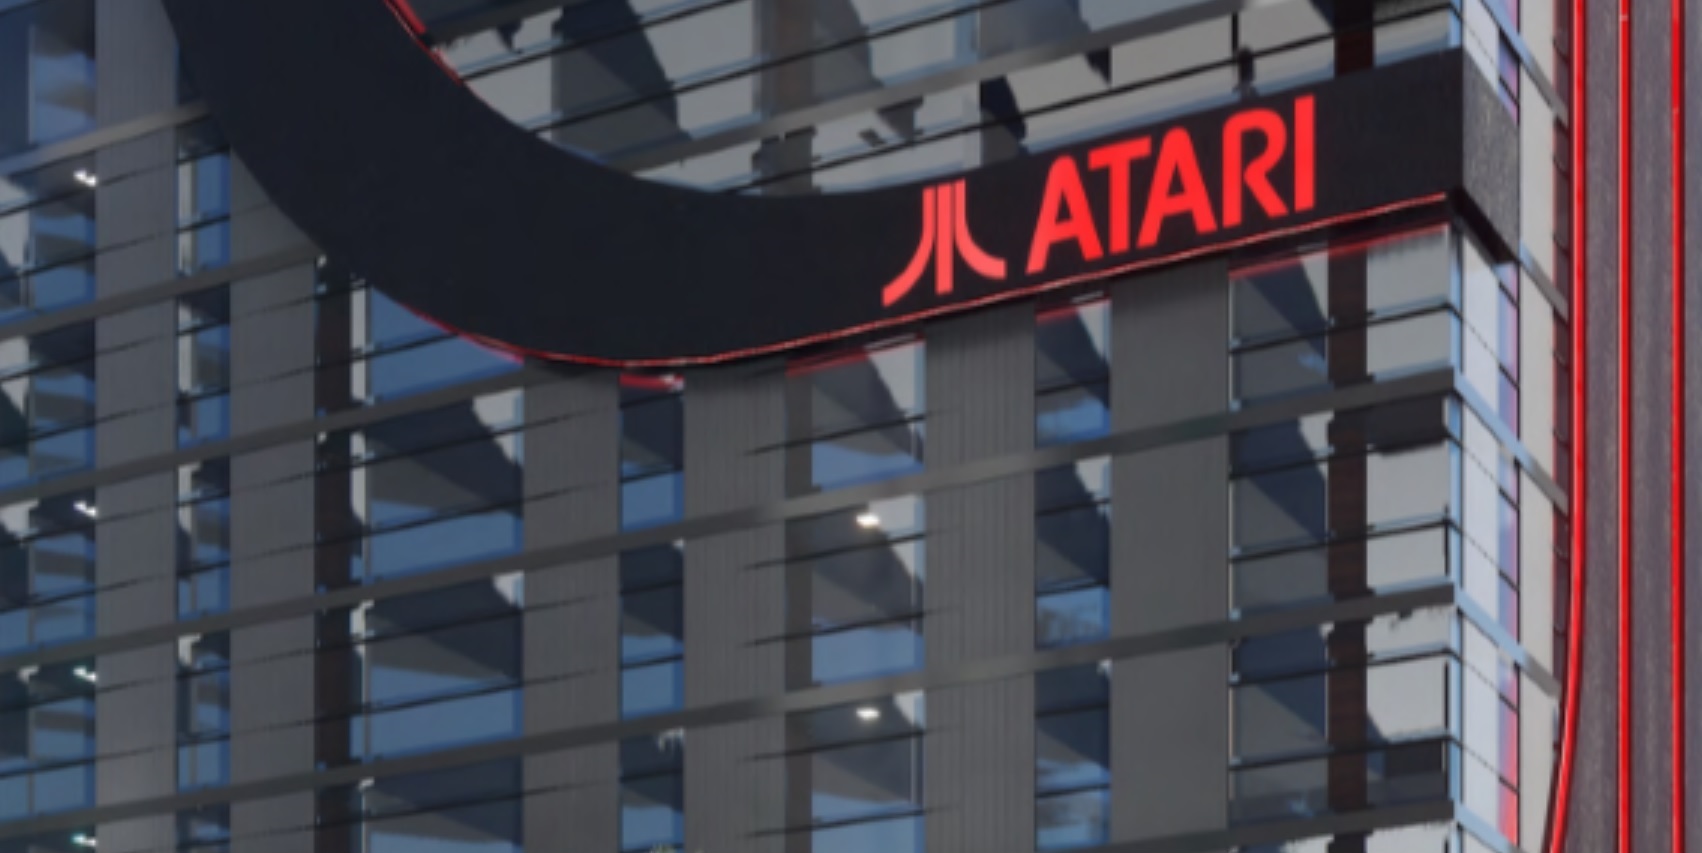 Atari hotel facade and sign